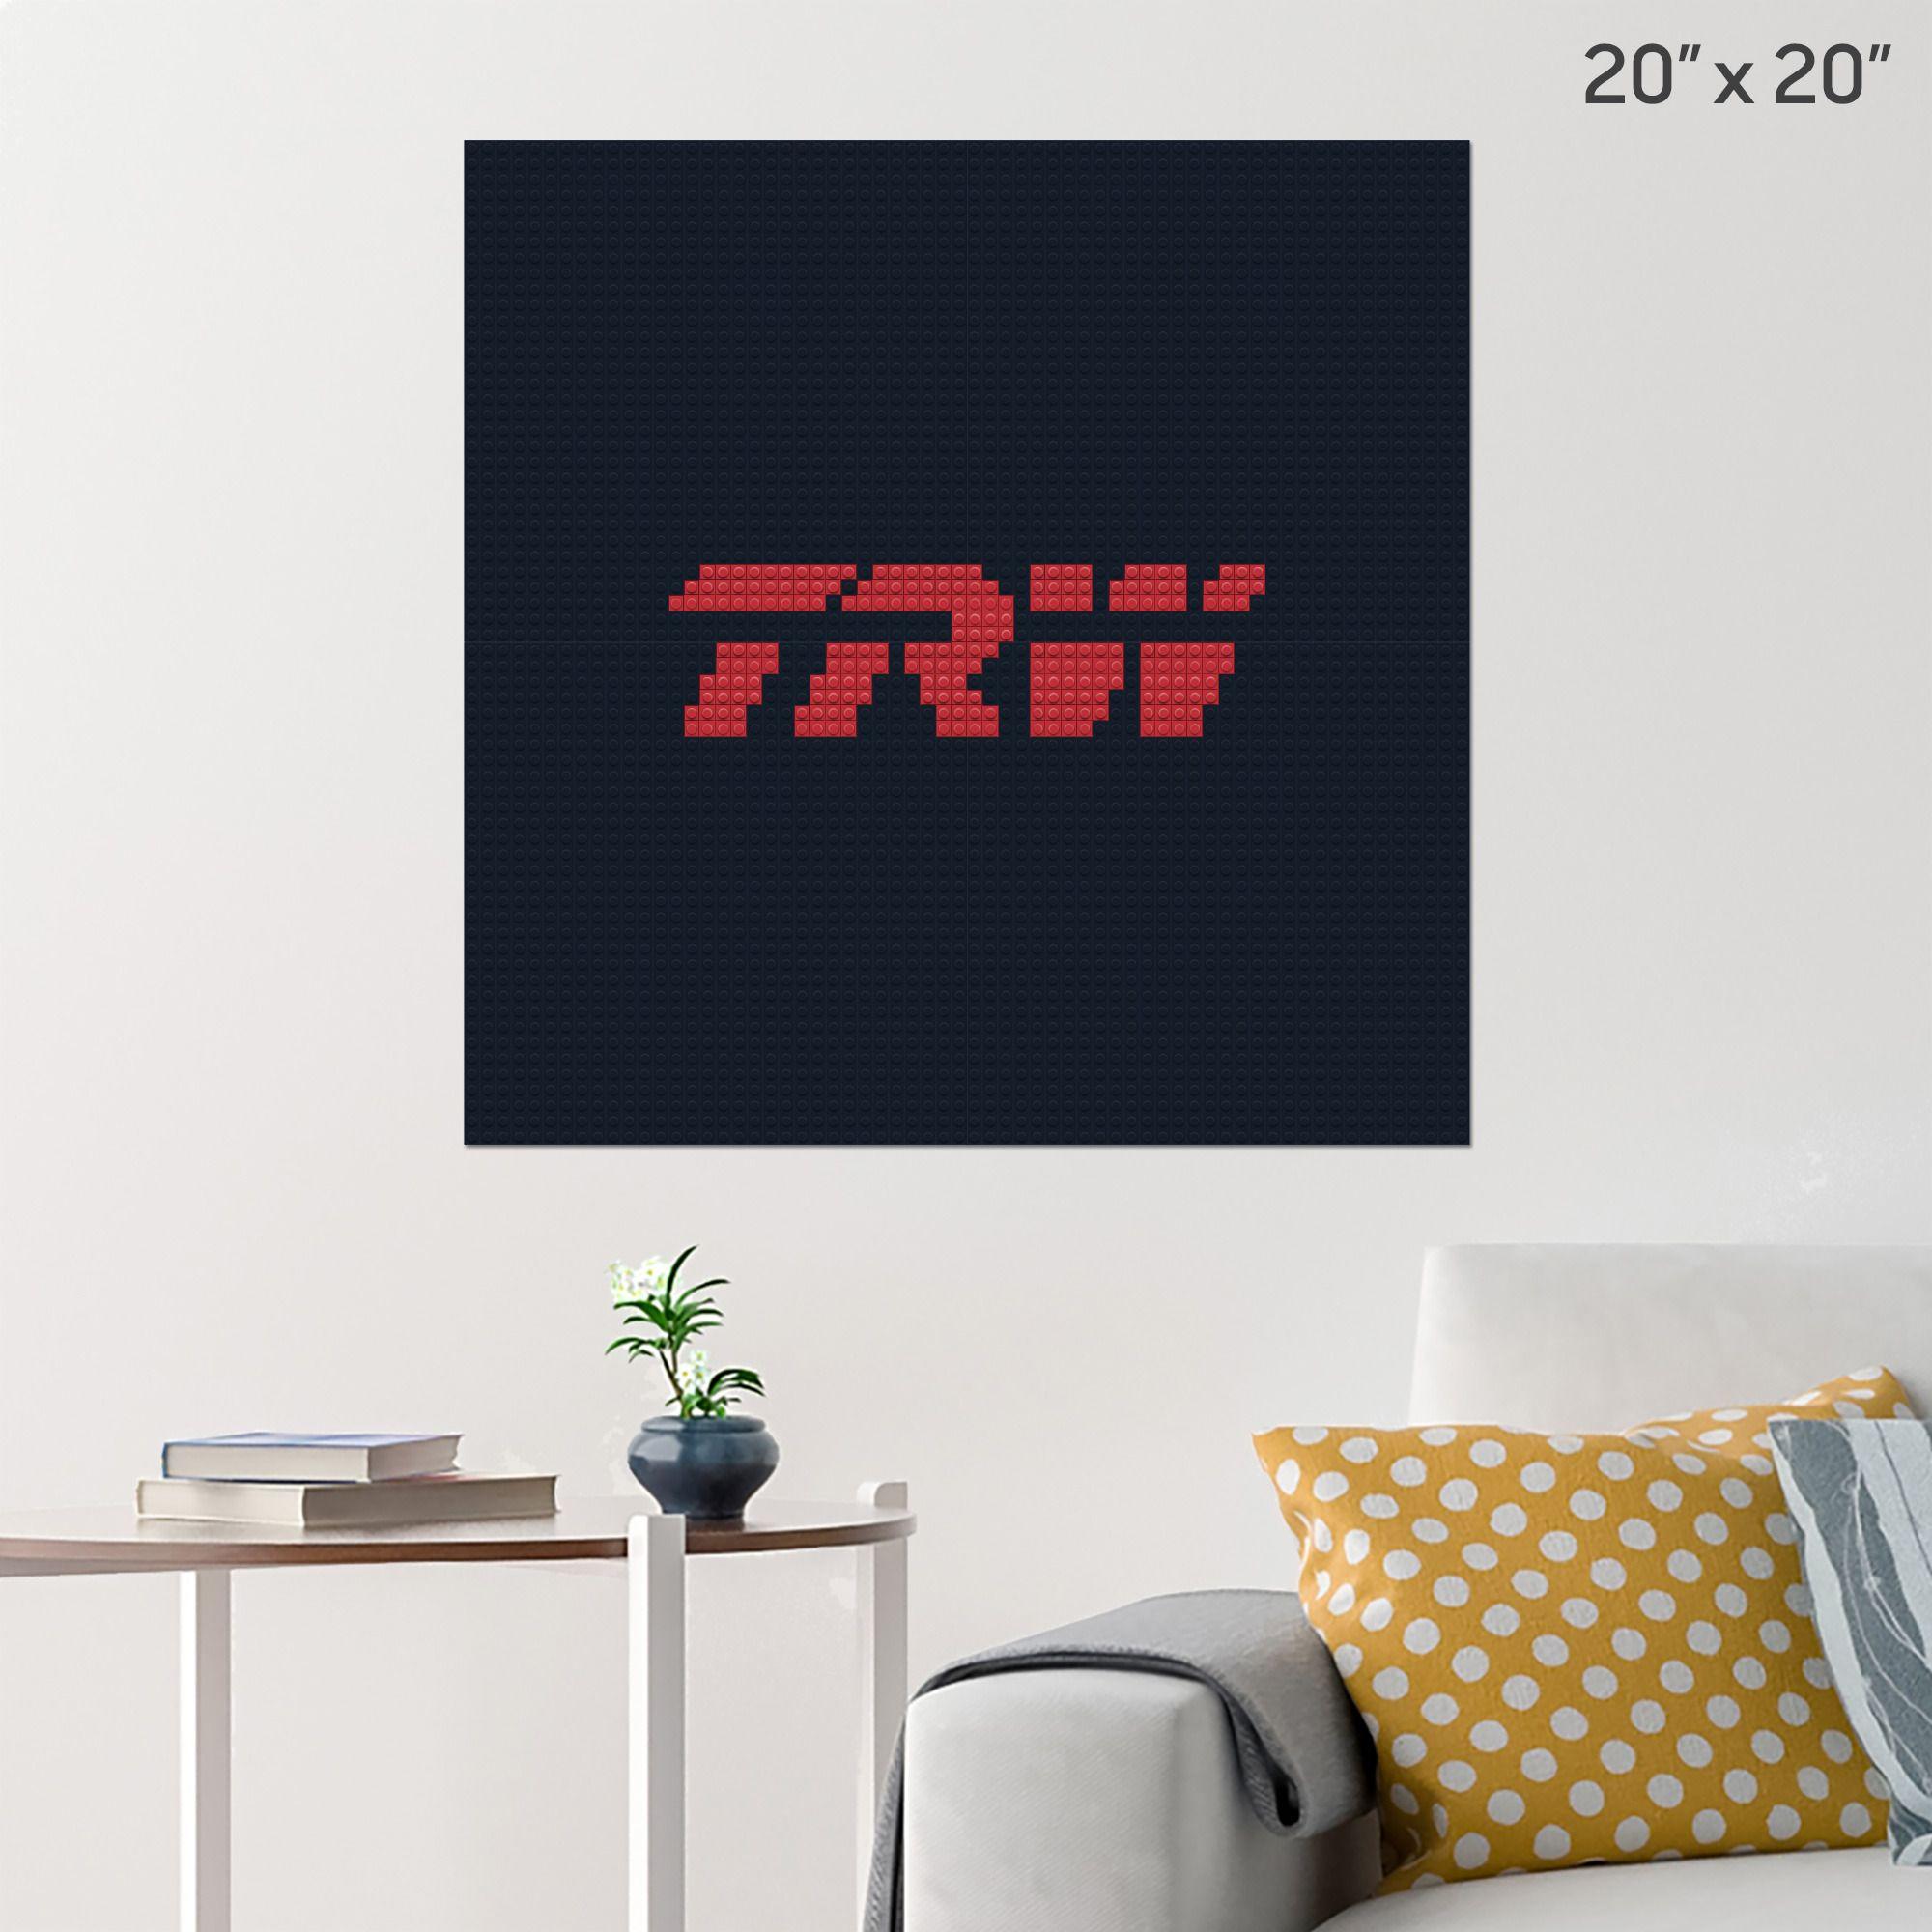 TRW Logo - TRW Automotive Holdings Corp. Logo Wall